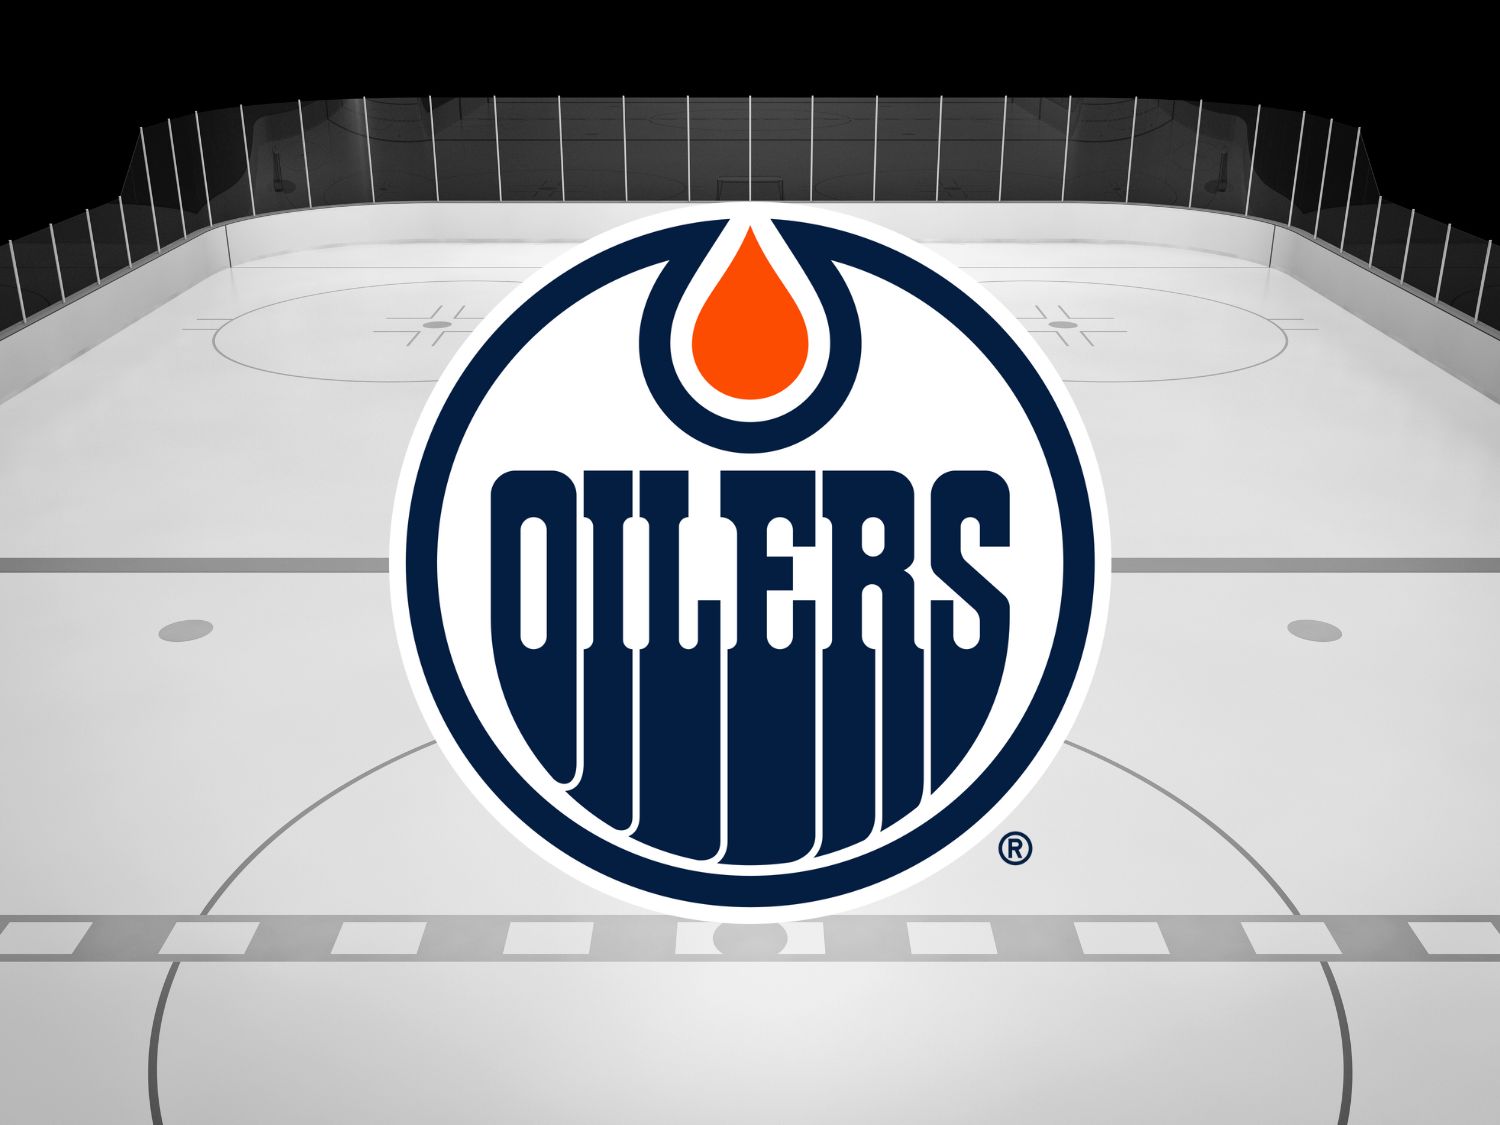 Edmonton Oilers Tickets and Seats